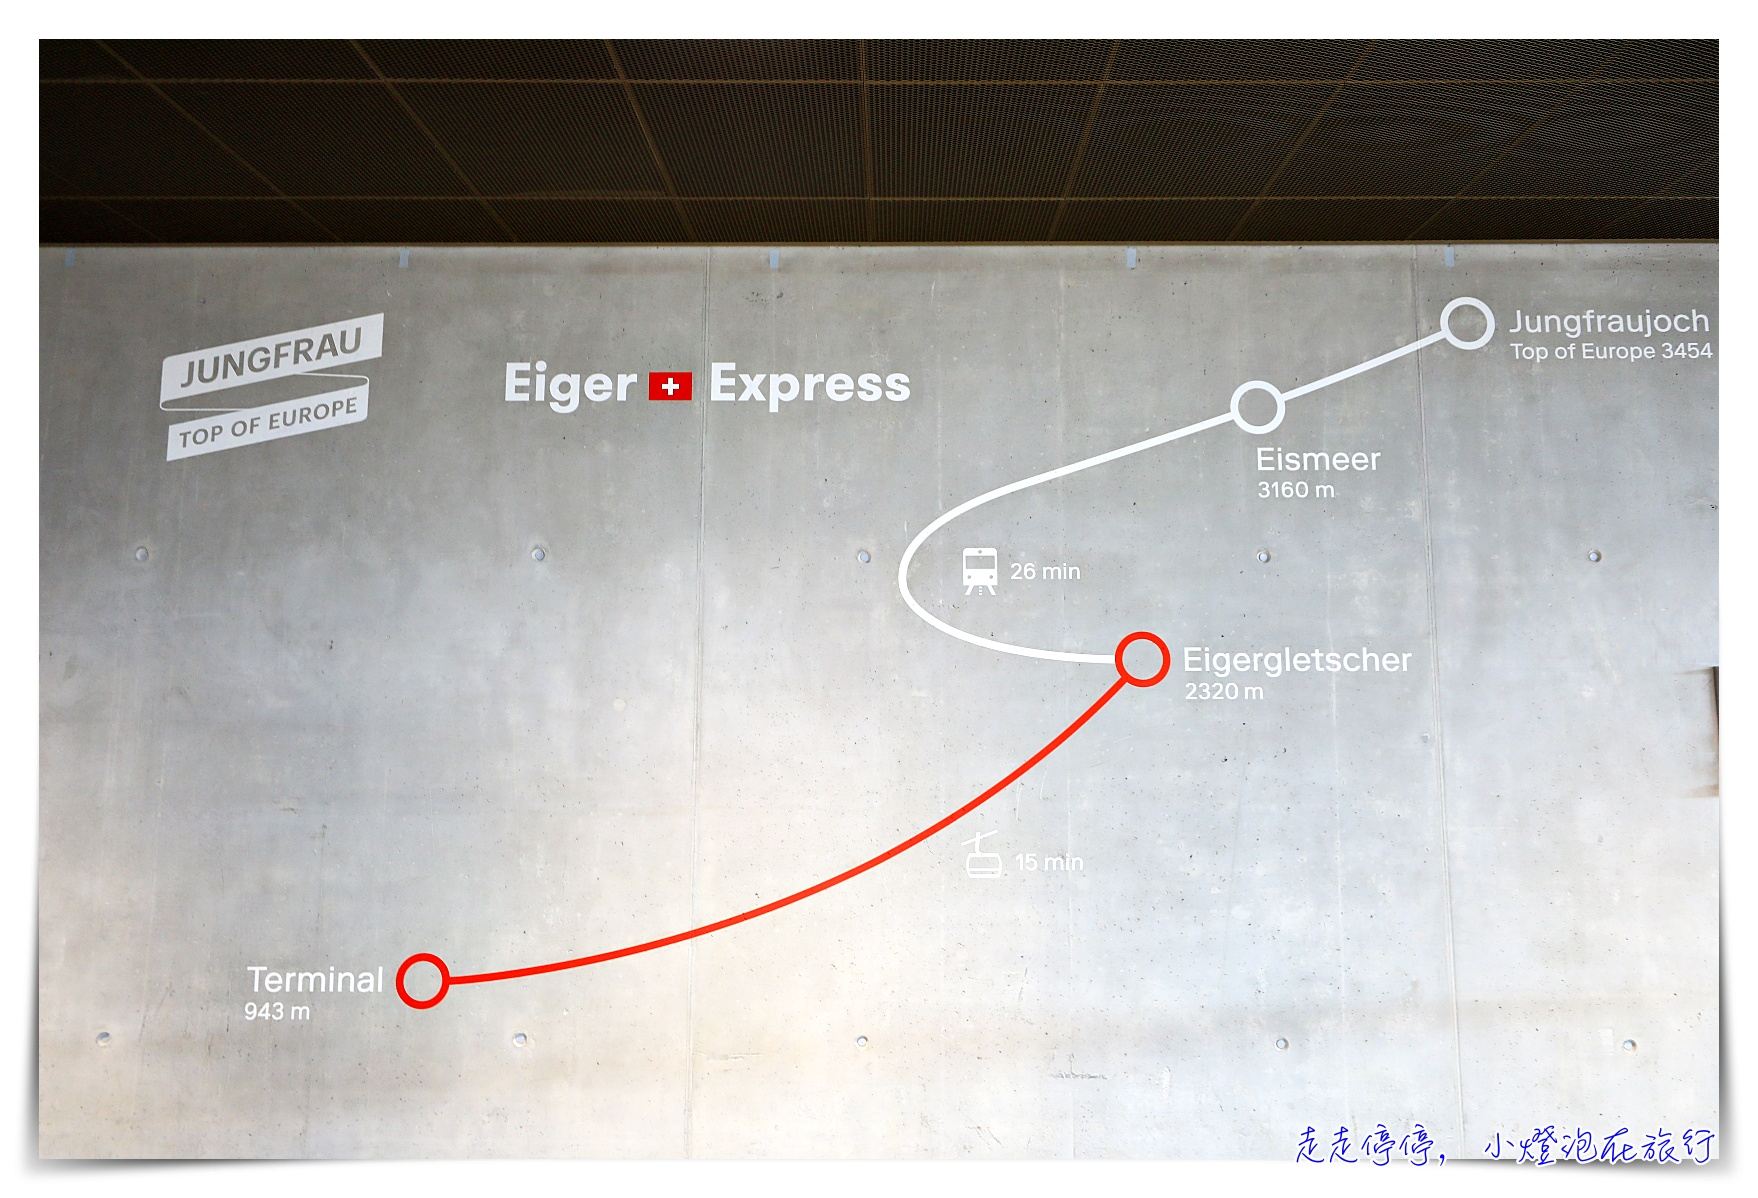 Eiger Express艾格快線｜上少女峰最快方式，格林瓦爾15分鐘上艾格峰冰川站鐵道，全程只需要45分鐘前往歐洲之巔Jungfraujoch